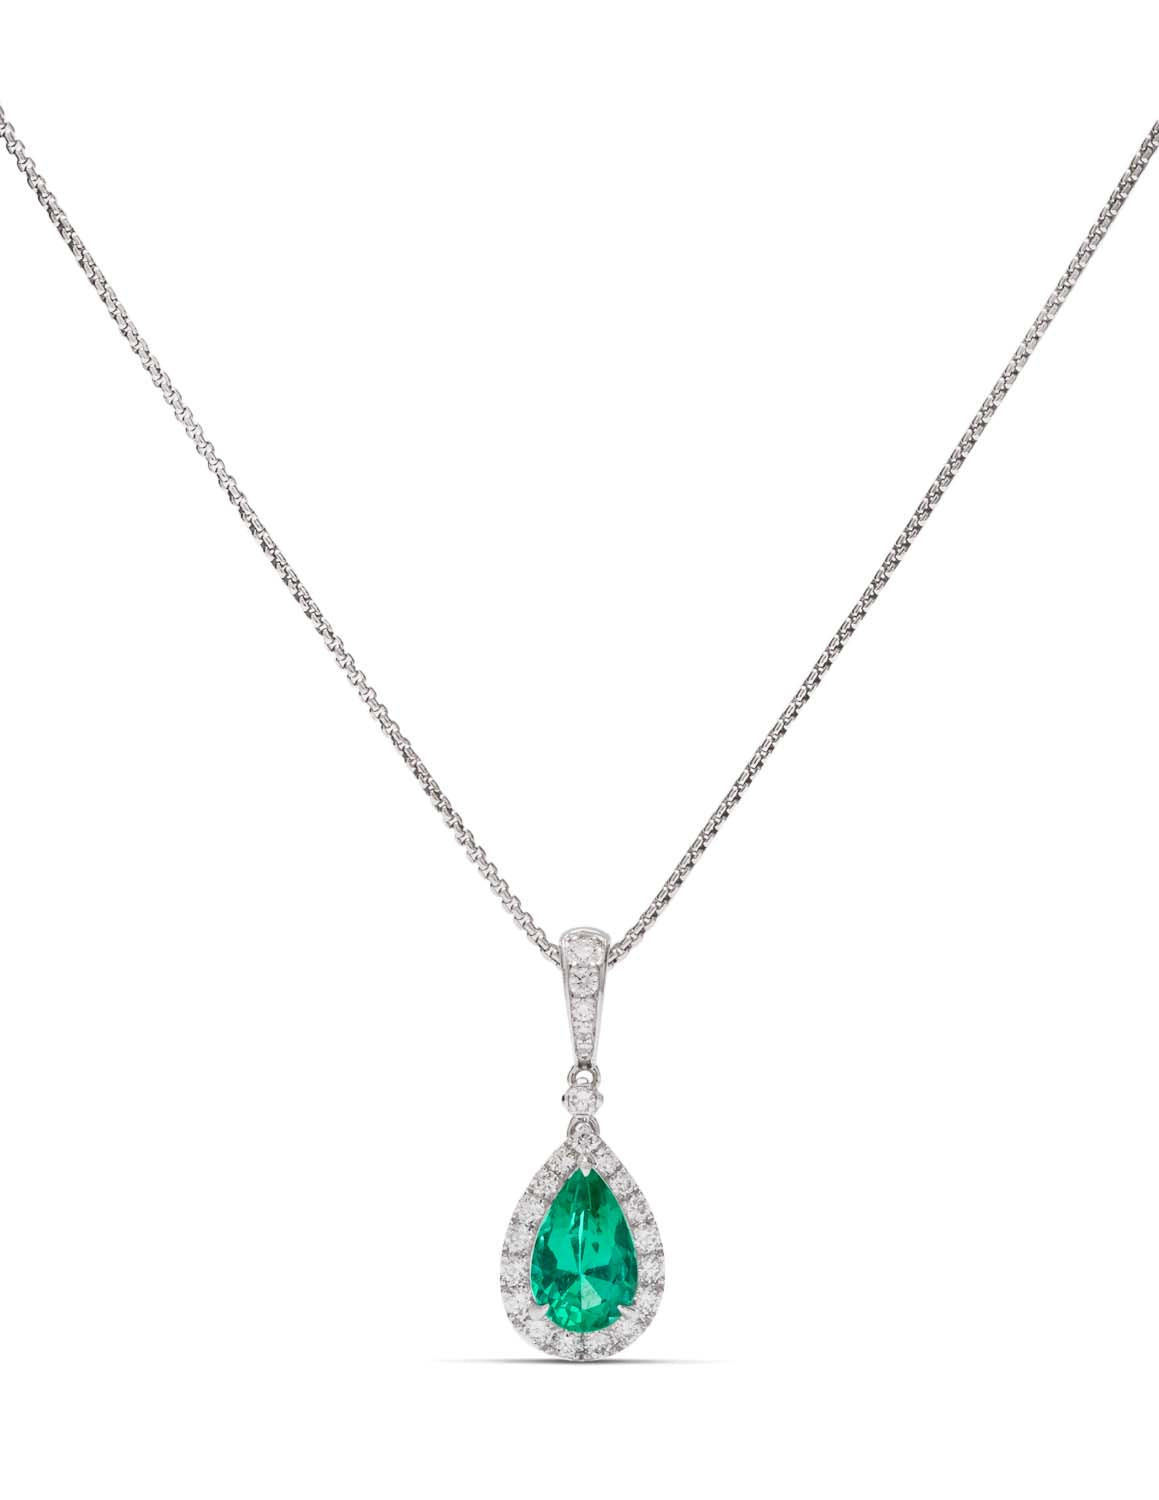 Pear Shaped Emerald and Diamond Pendant - Charles Koll Jewellers